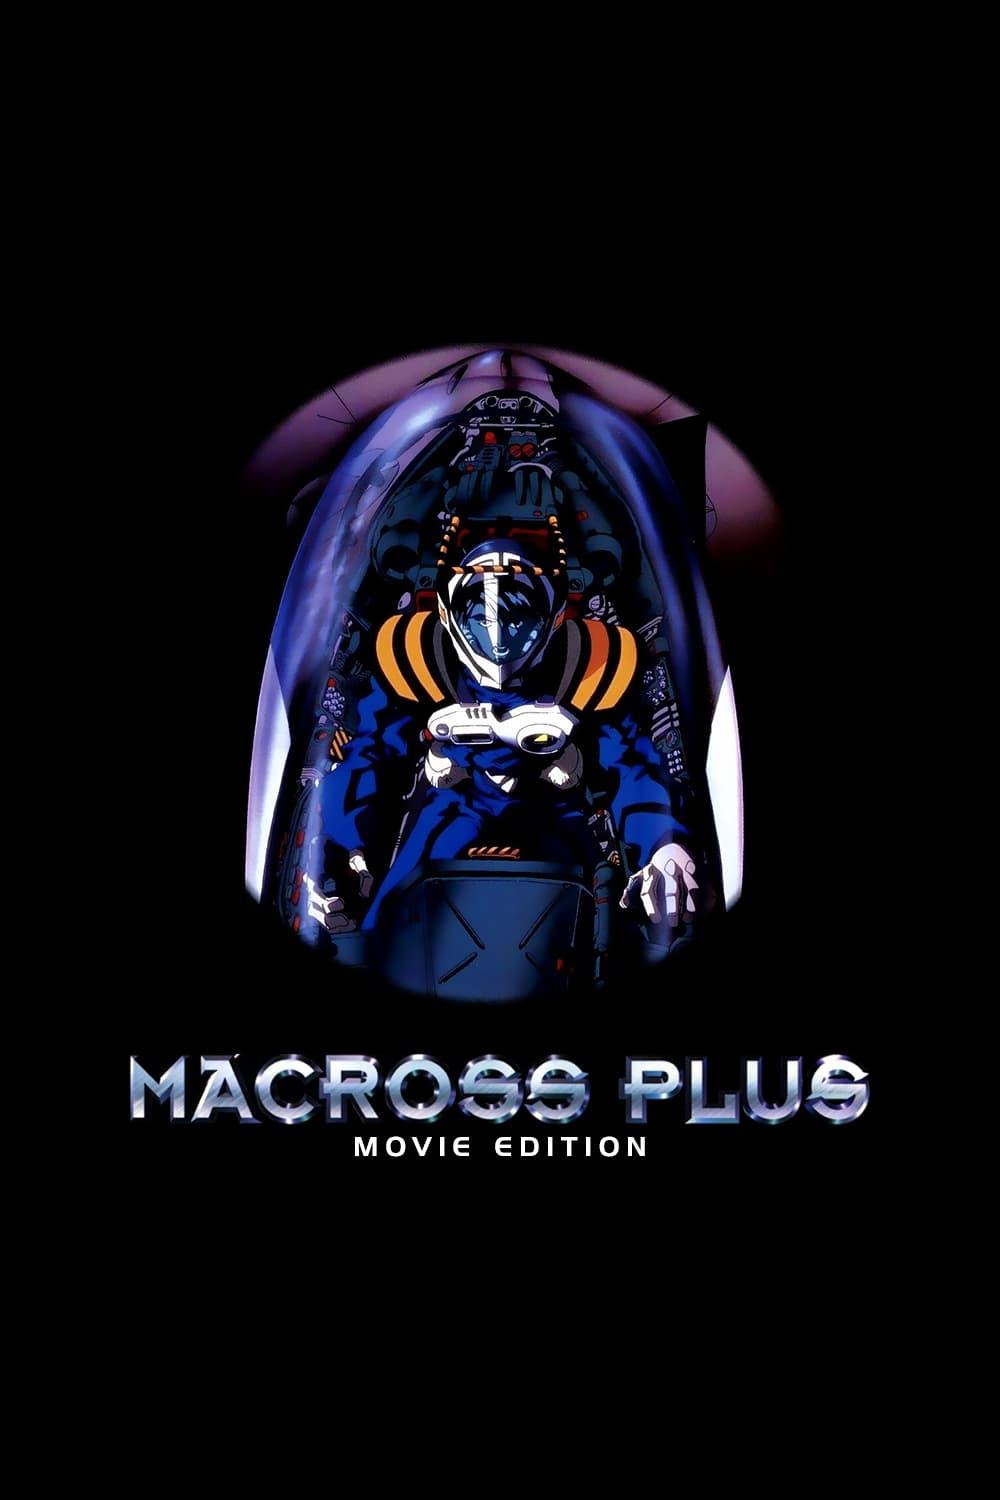 Macross Plus: The Movie poster